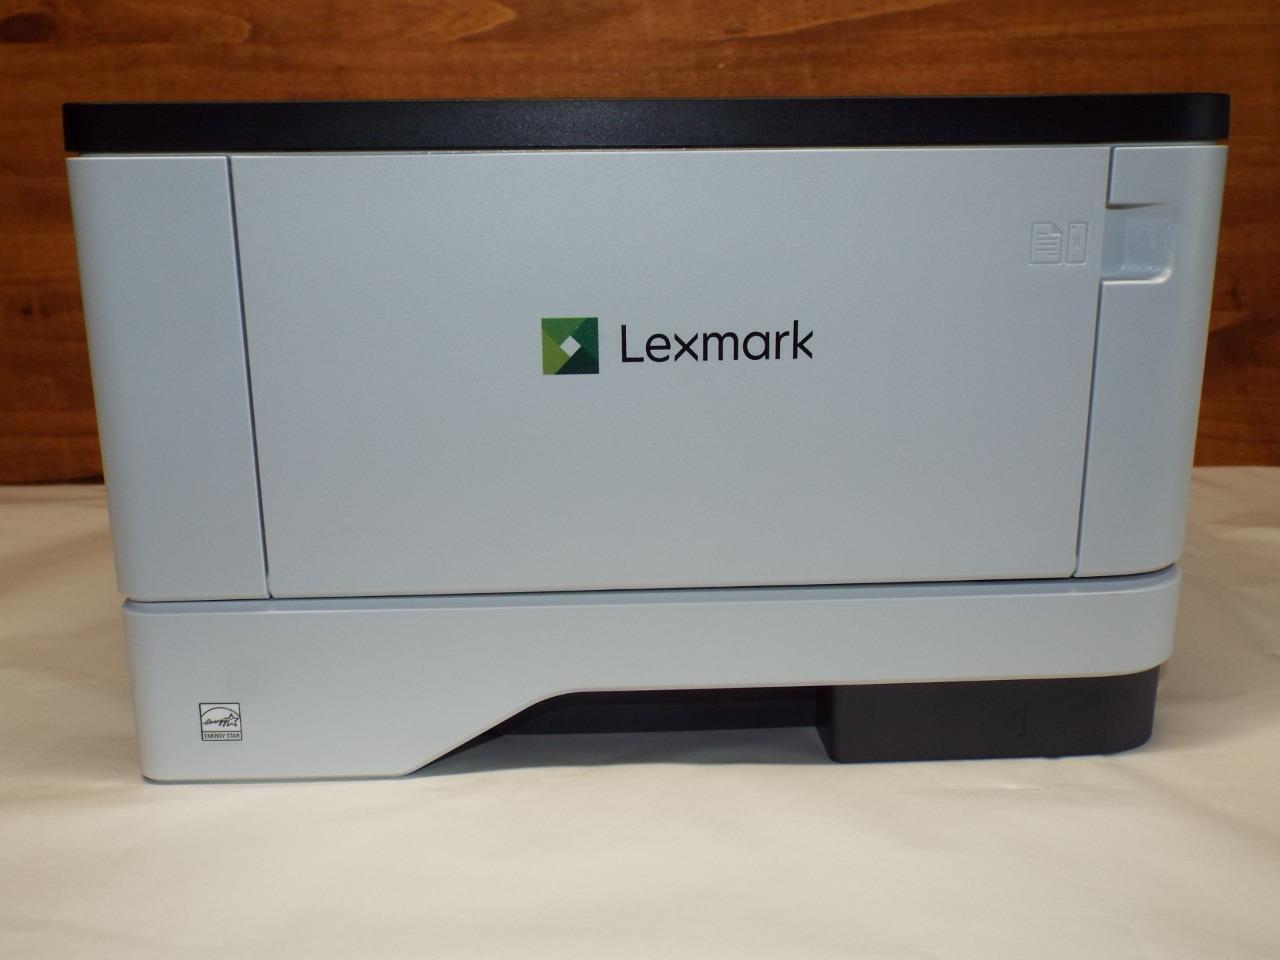 Lexmark Wireless Printer B3340dw WI-FI duplex laser Printer 40PPM fully tested